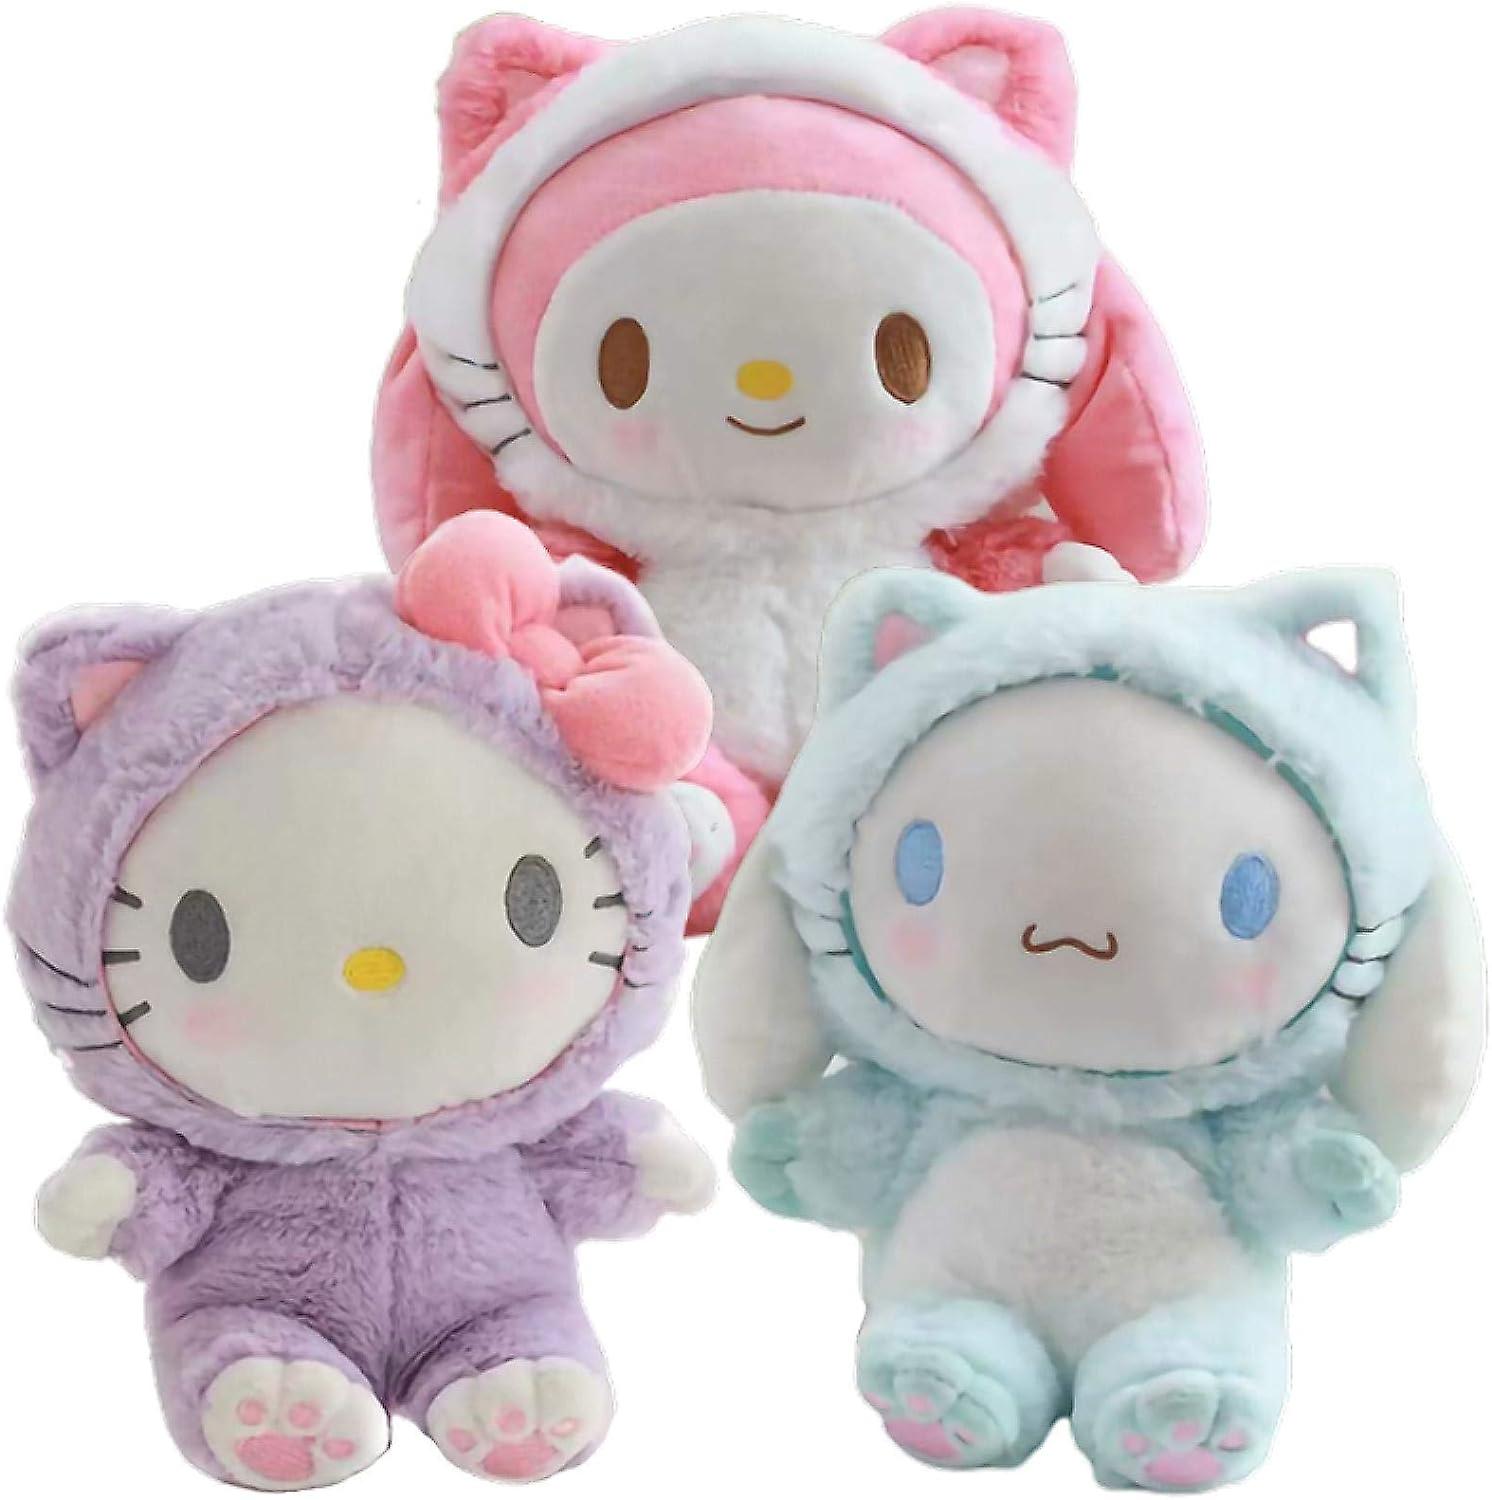 25 Cm My Melody Cinnamorol Kitty Soft Stuffed Plush Dolls Cute Anime Kawali Dogs Cats Decorate Bags Adult Kids Toys Girls Gift C C -